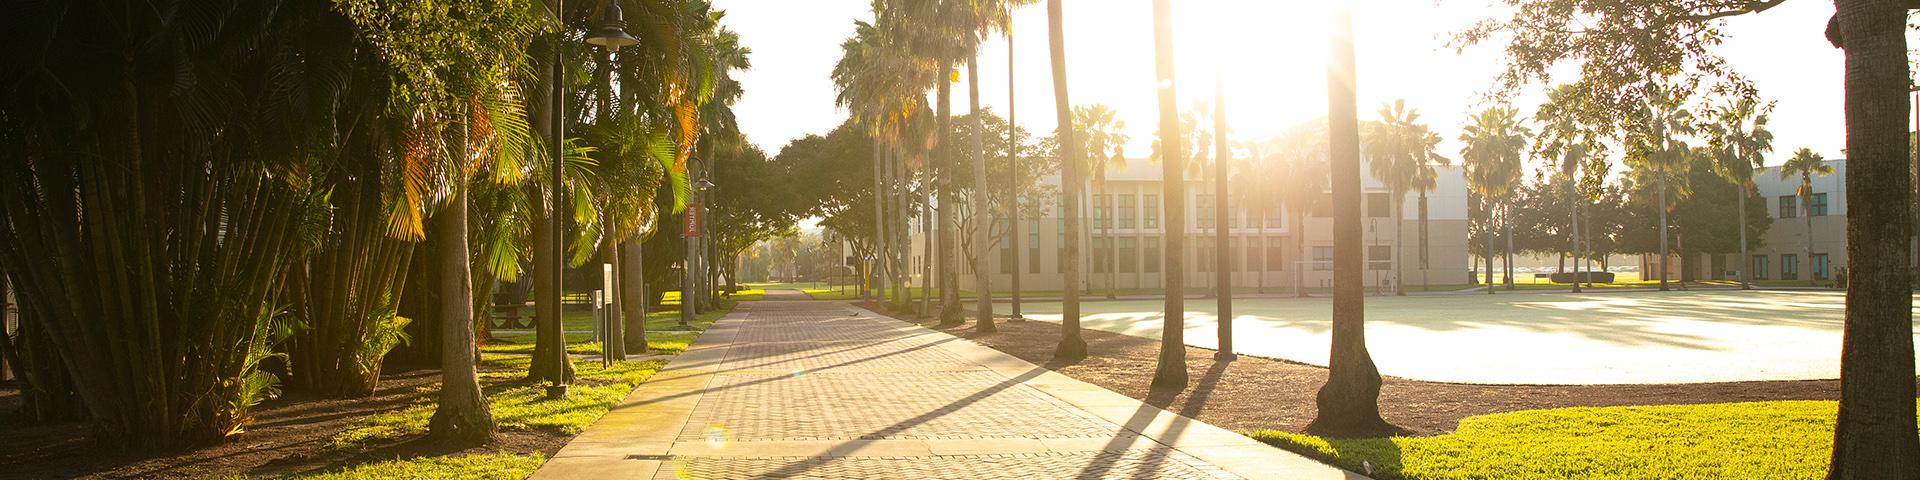 Jupiter campus recreational fields in the sun shine